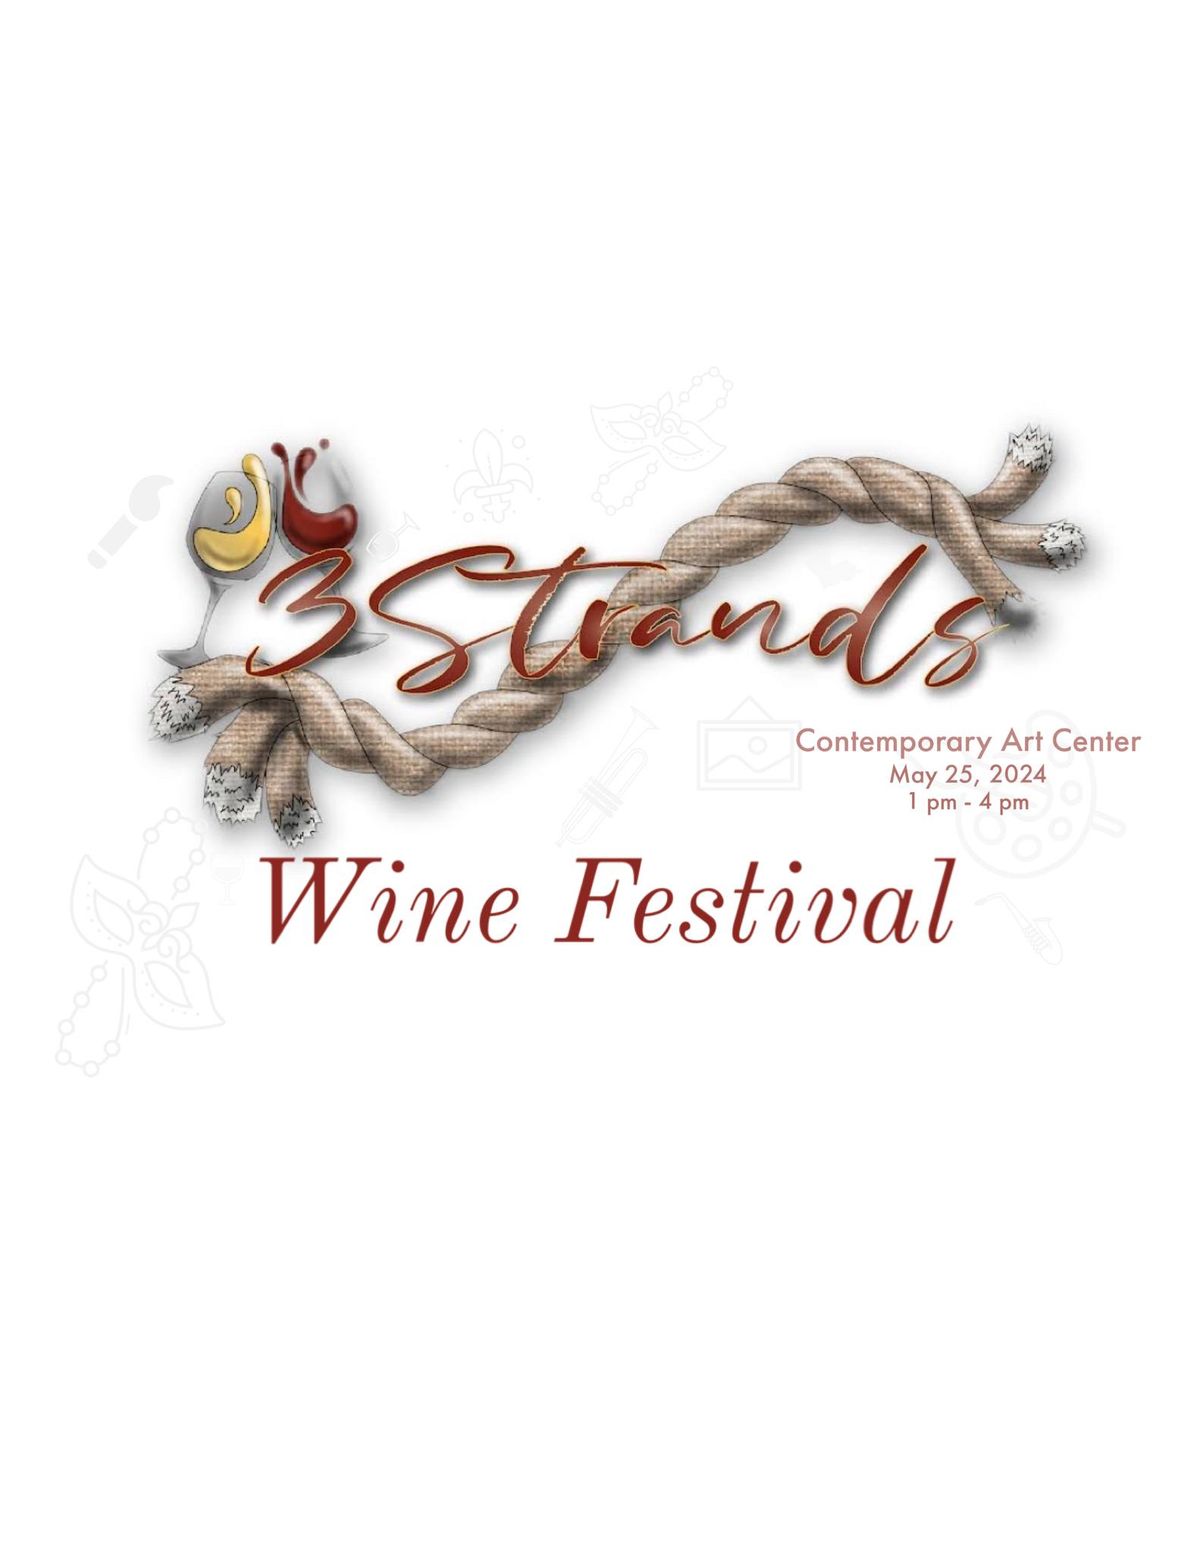 3 Strands Wine Festival - New Orleans